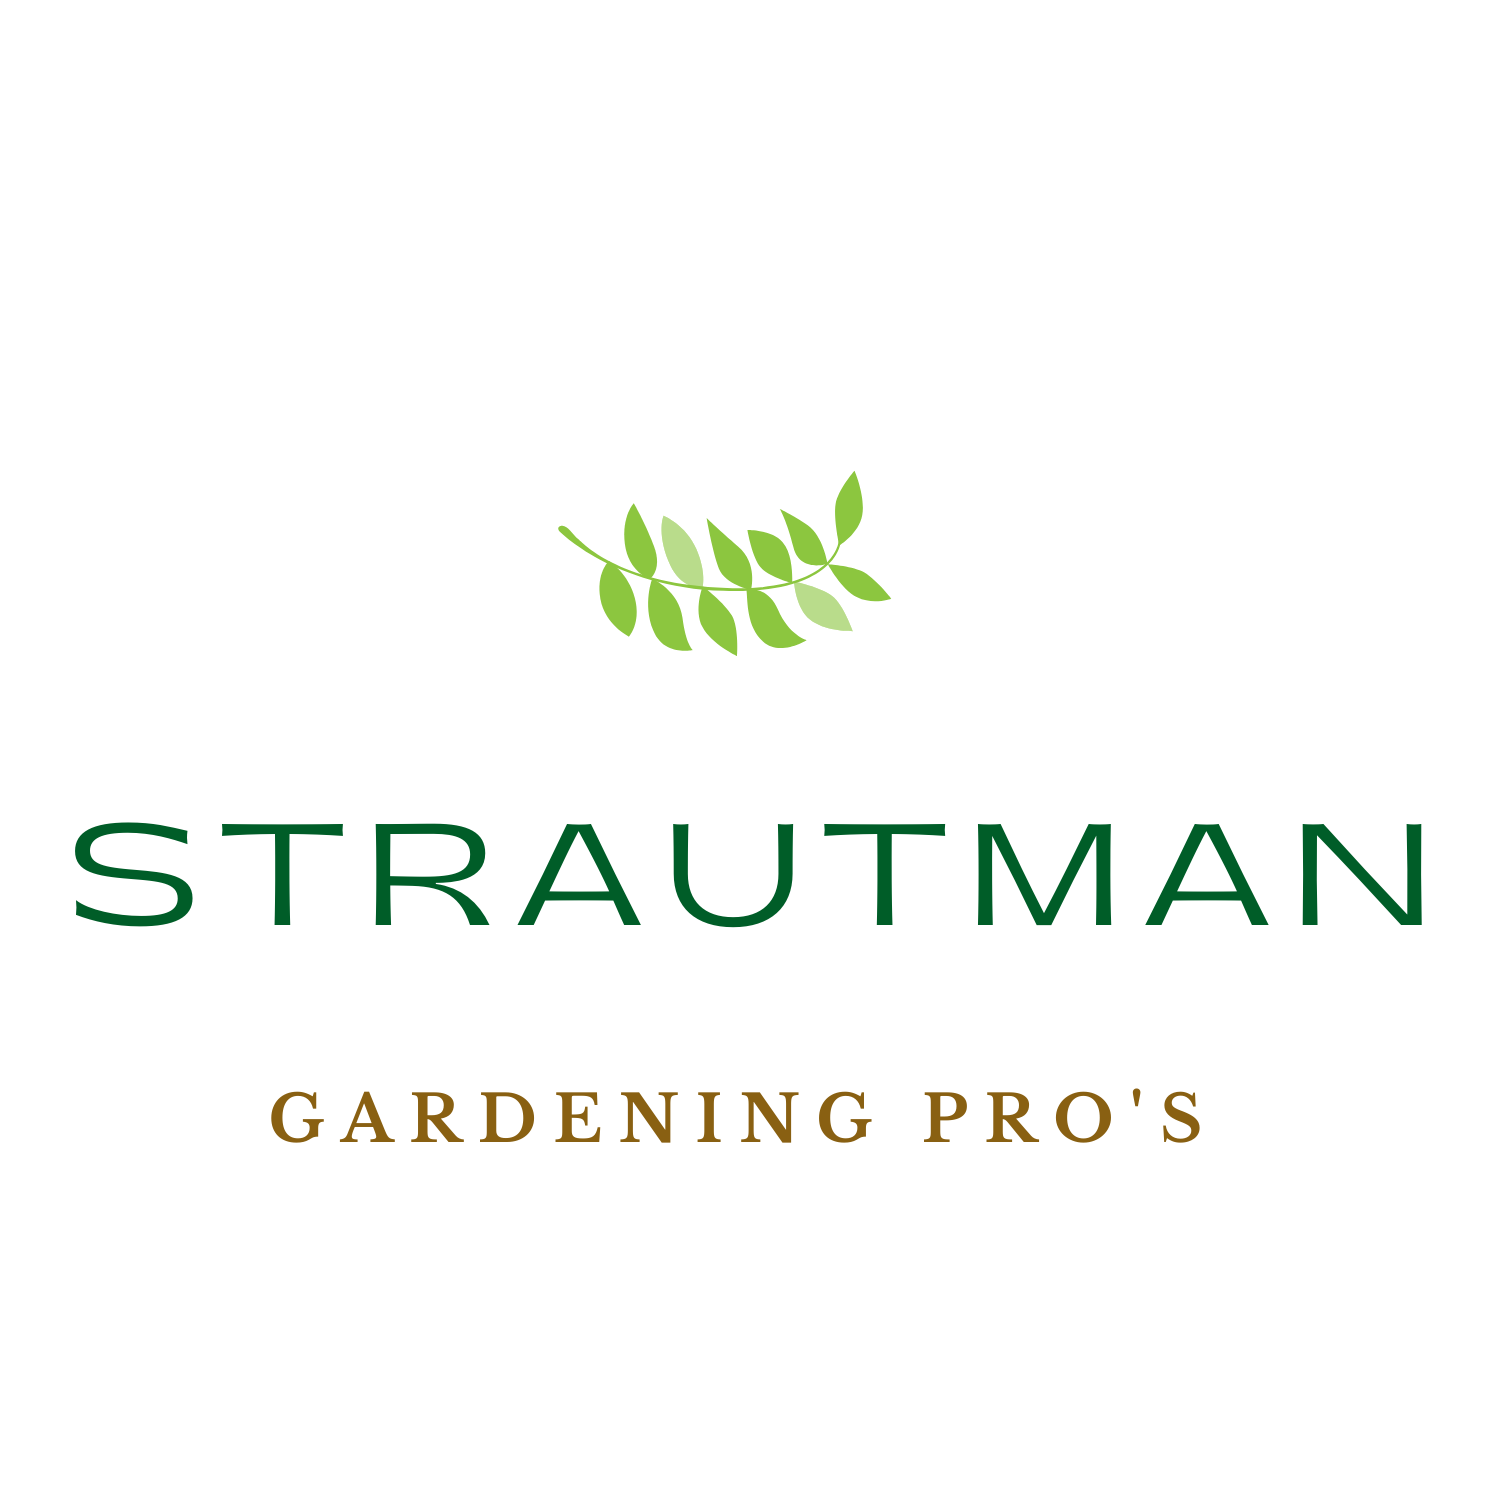 Strautman Gardening Pro&#39;s